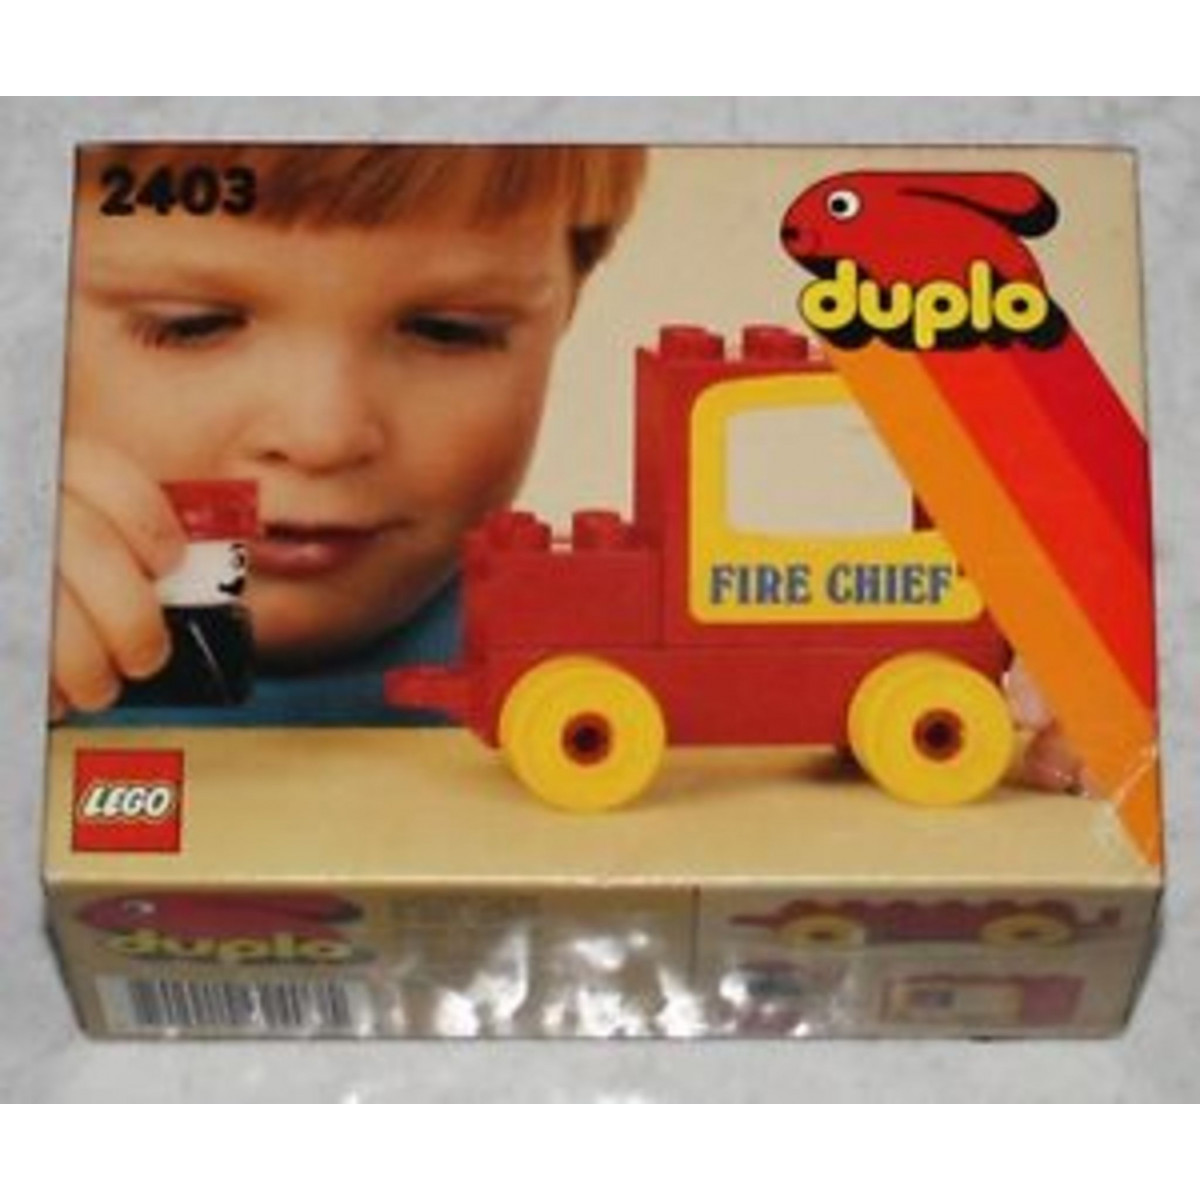 LEGO Duplo 2403 - Fire Chief Building Set